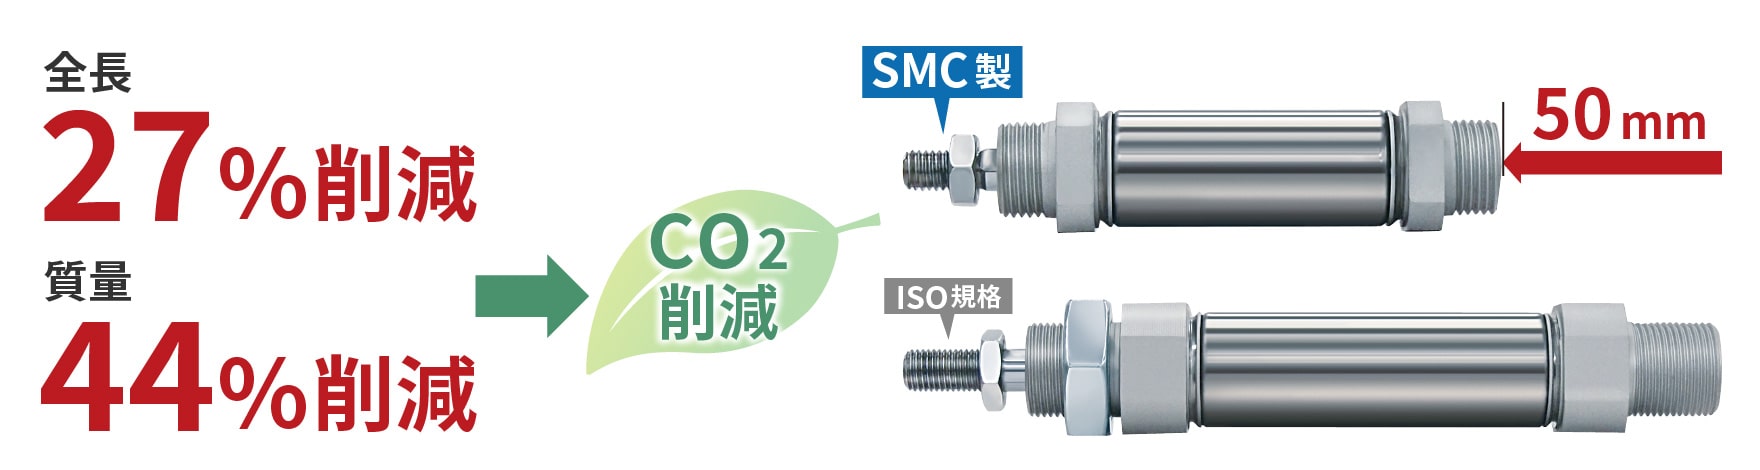 SMC vs ISO規格